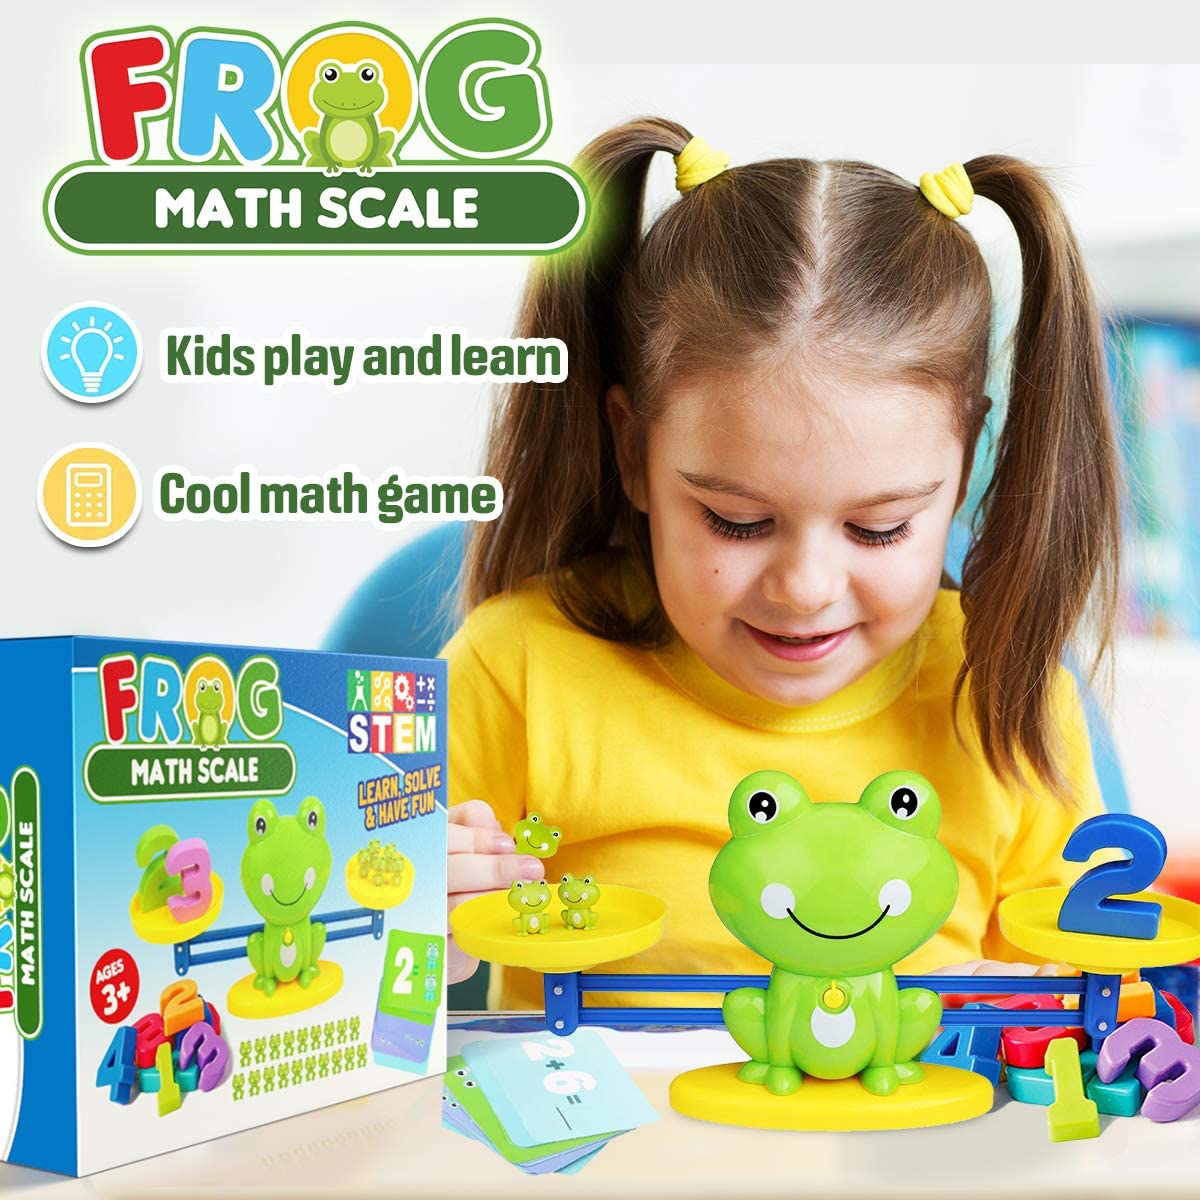  BBPOOL Frog Balance Cool Math Counting Game